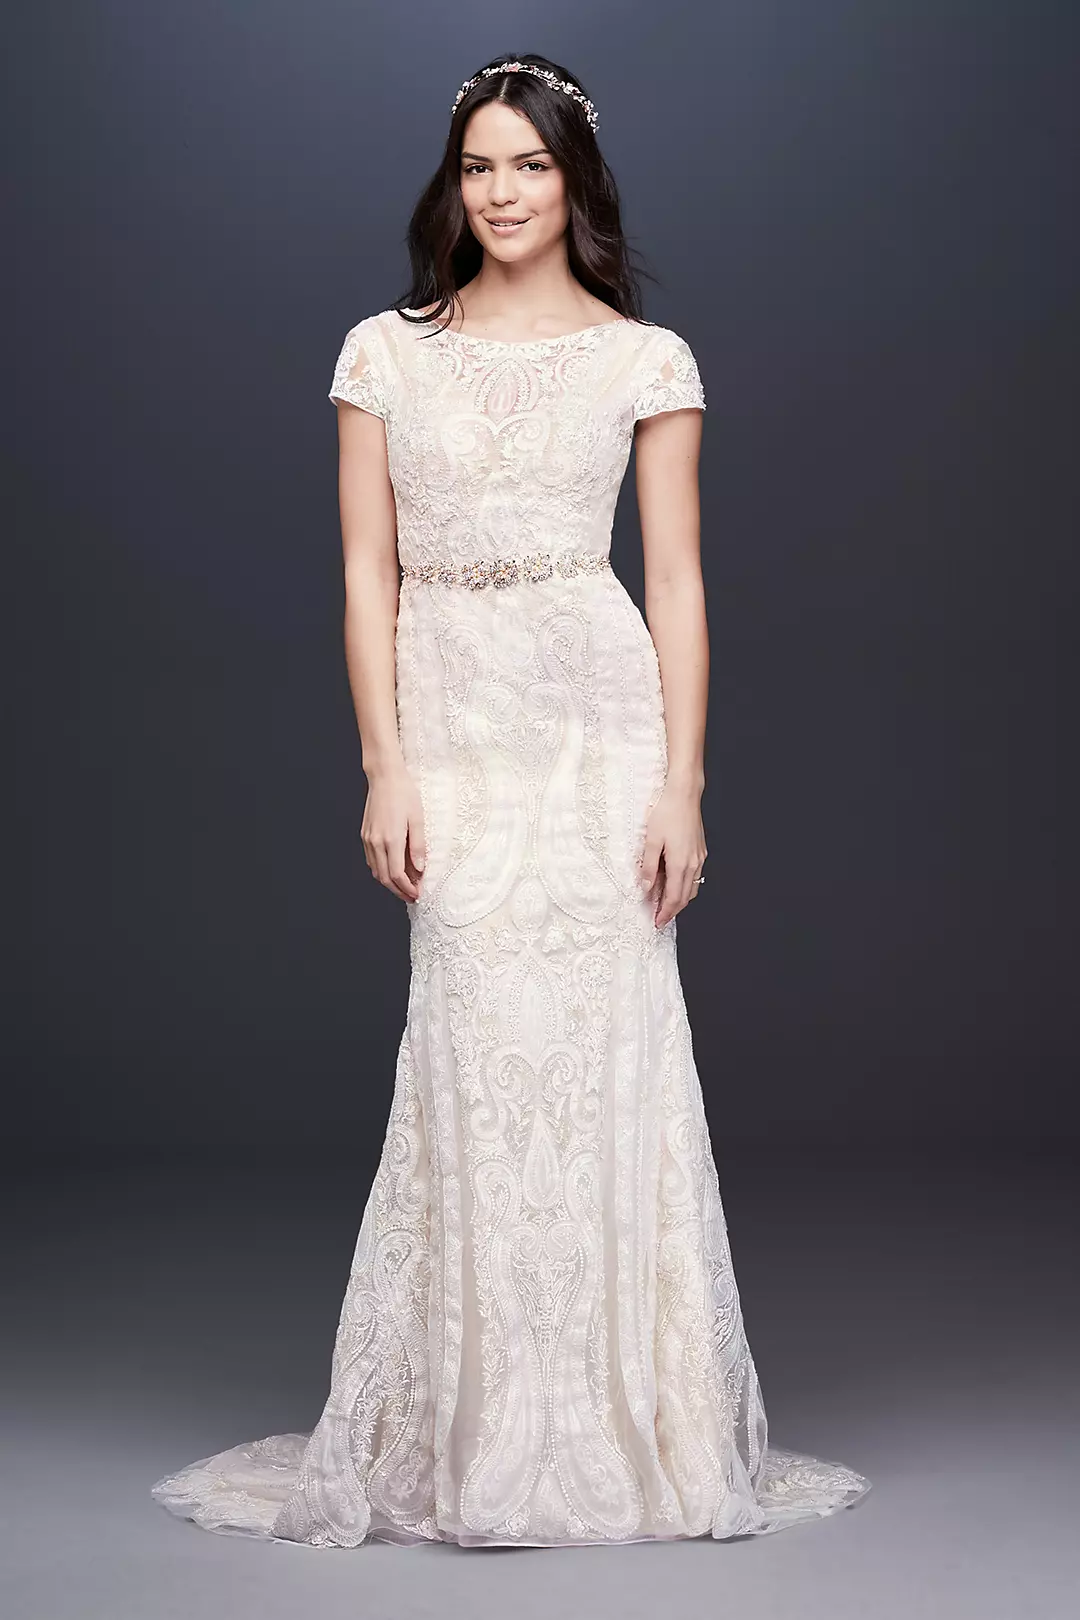 Laser-Cut Lace Illusion Cap Sleeve Wedding Dress Image